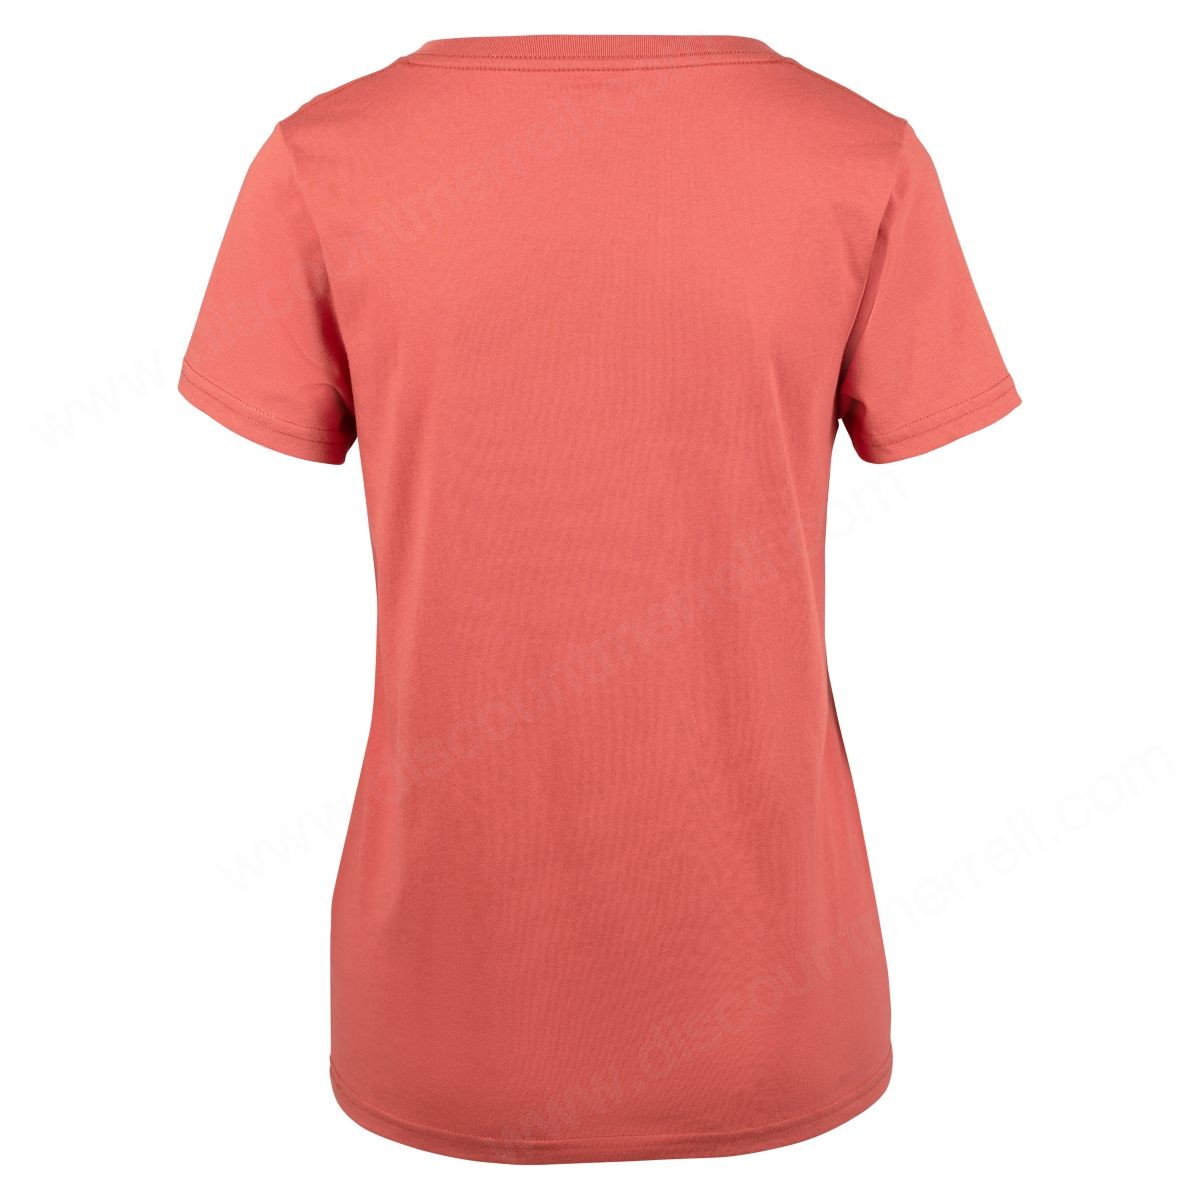 Merrell Womens's Pascal T-Shirts Apricot Brandy/boulder/white - -1